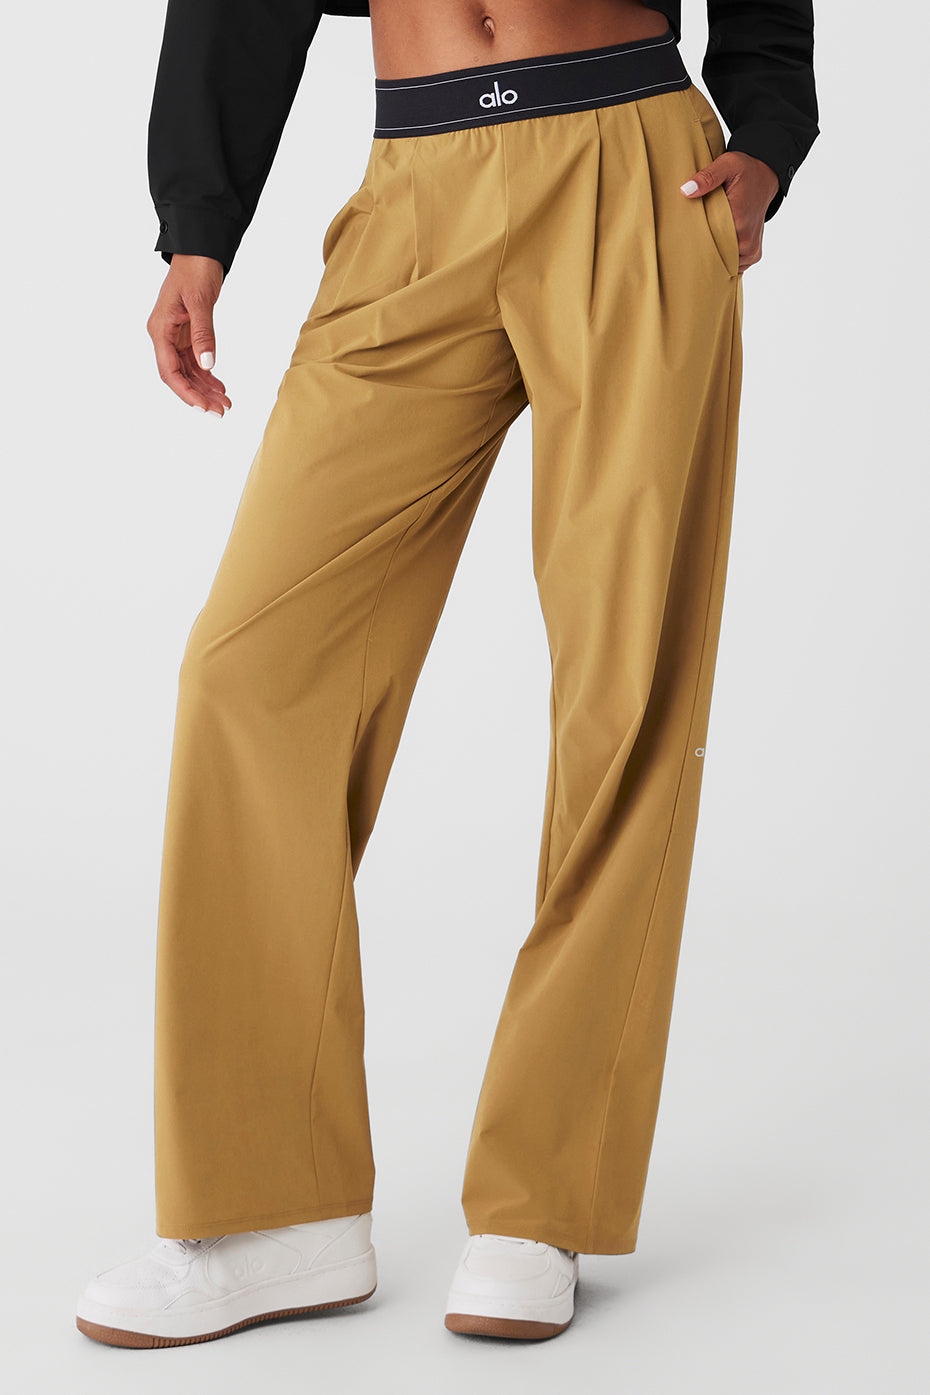 Suit Up Trouser - Black  Long sleeve crop top, Trousers, Suits